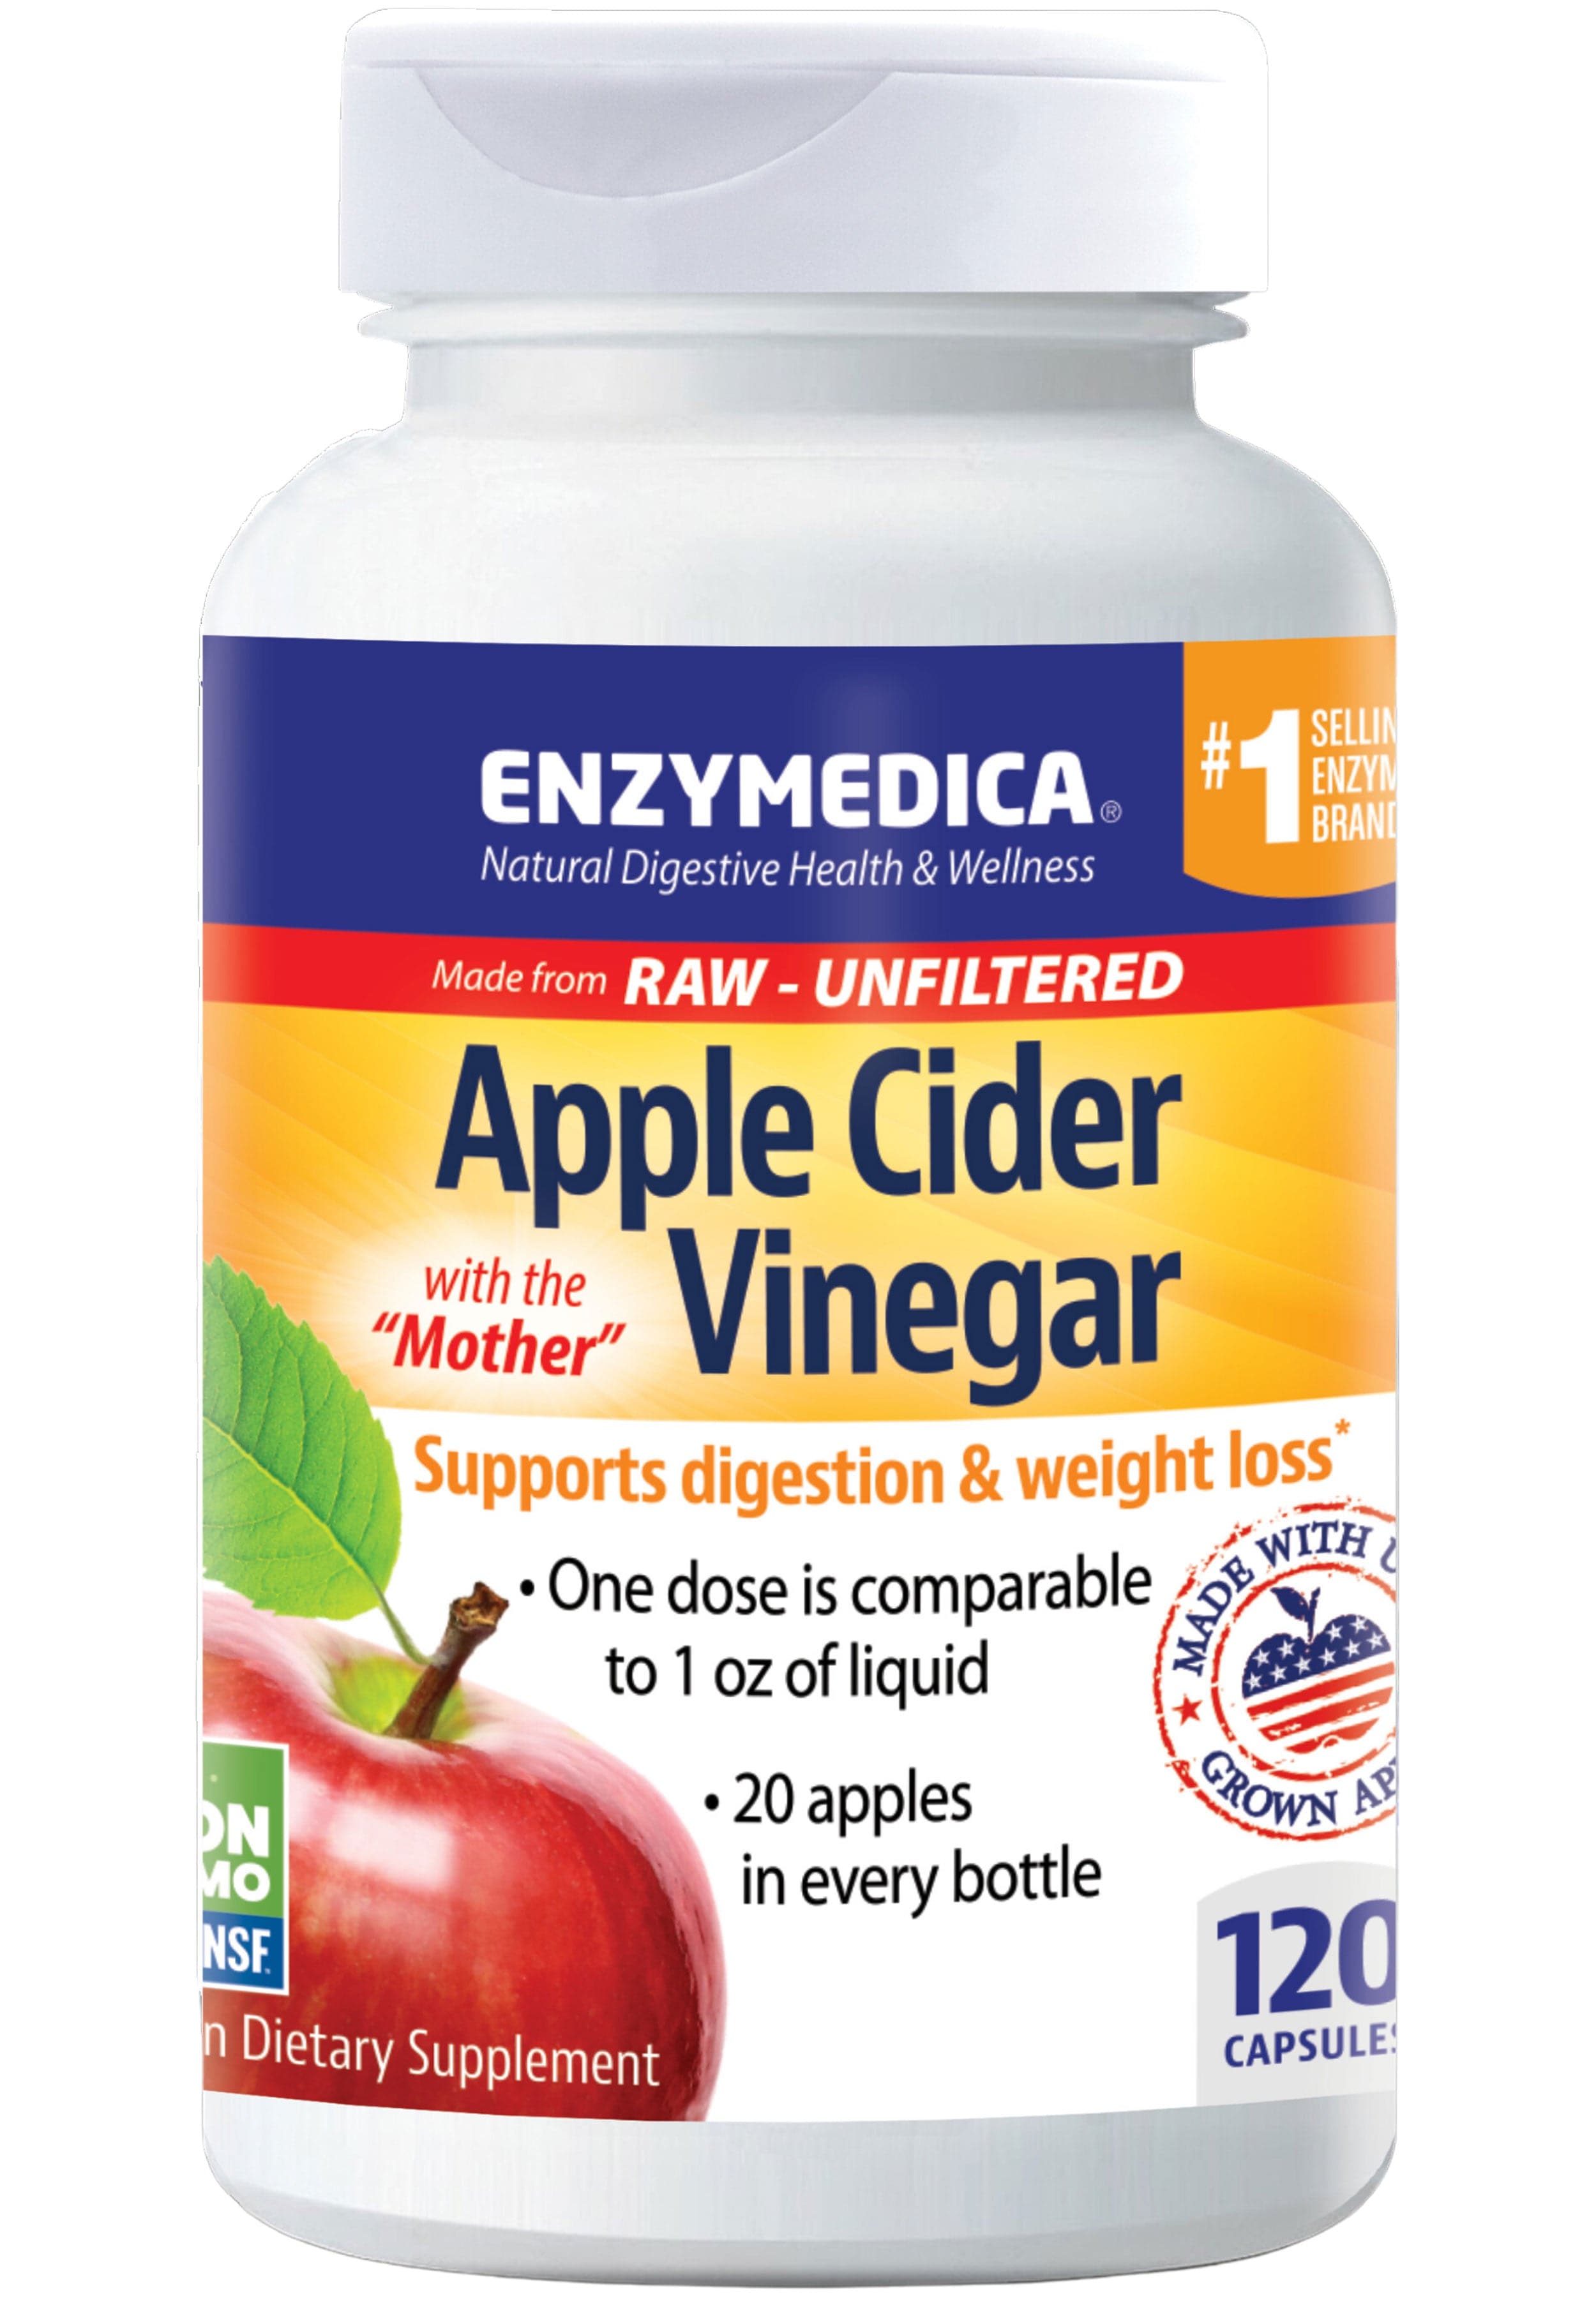 Enzymedica Apple Cider Vinegar Capsules